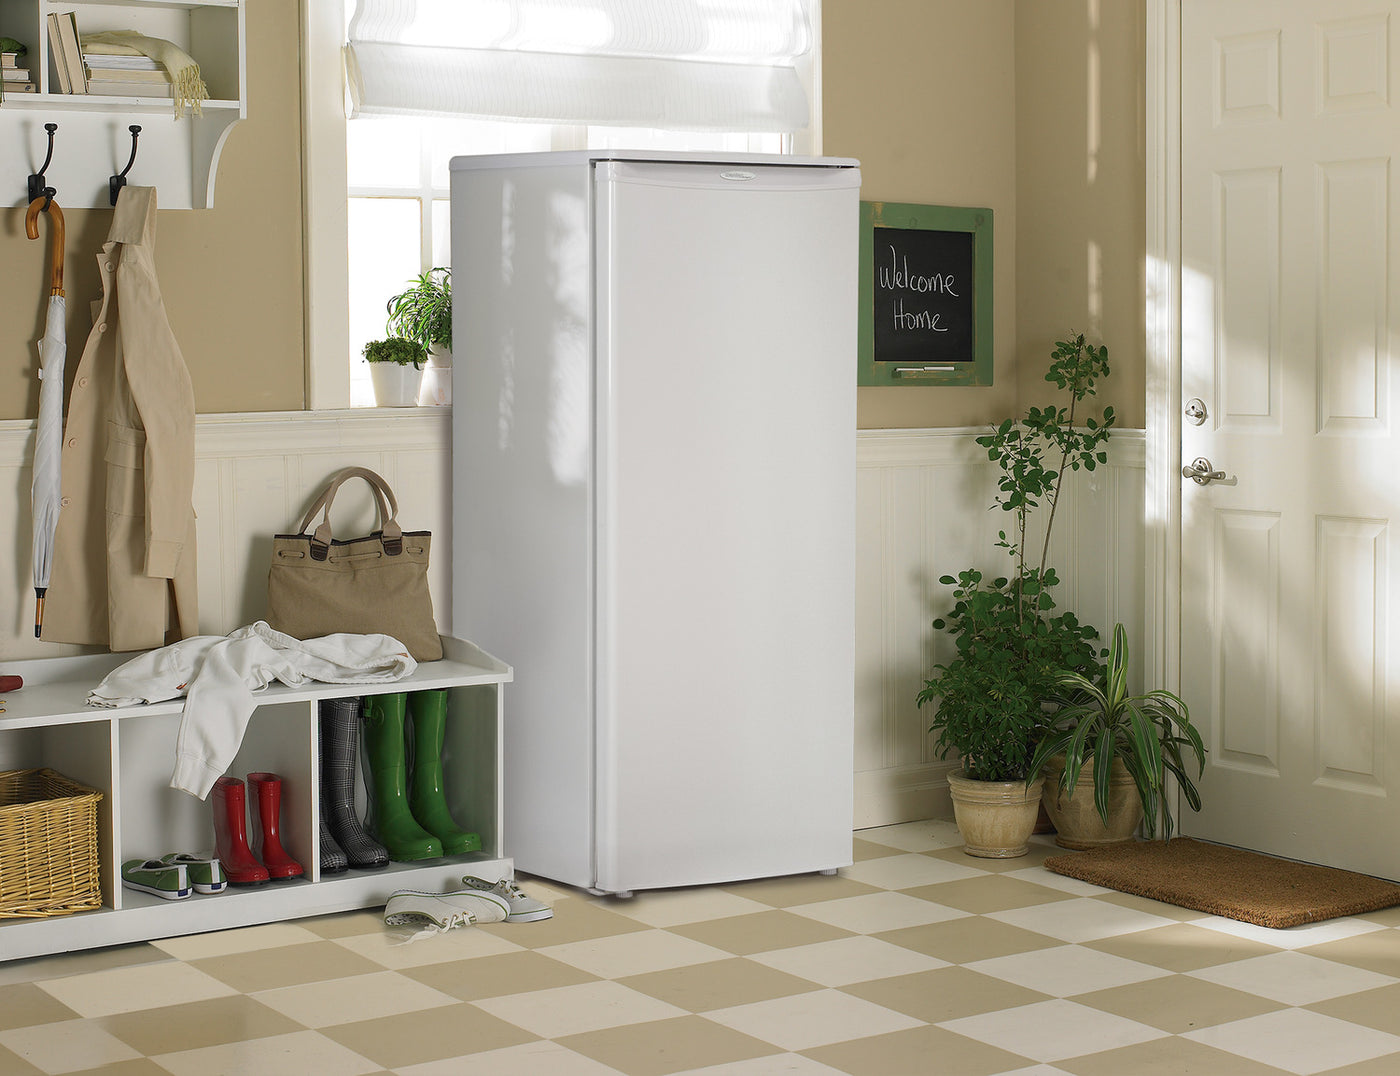 Danby White All-Refrigerator (11 Cu. Ft.) - DAR110A1WDD